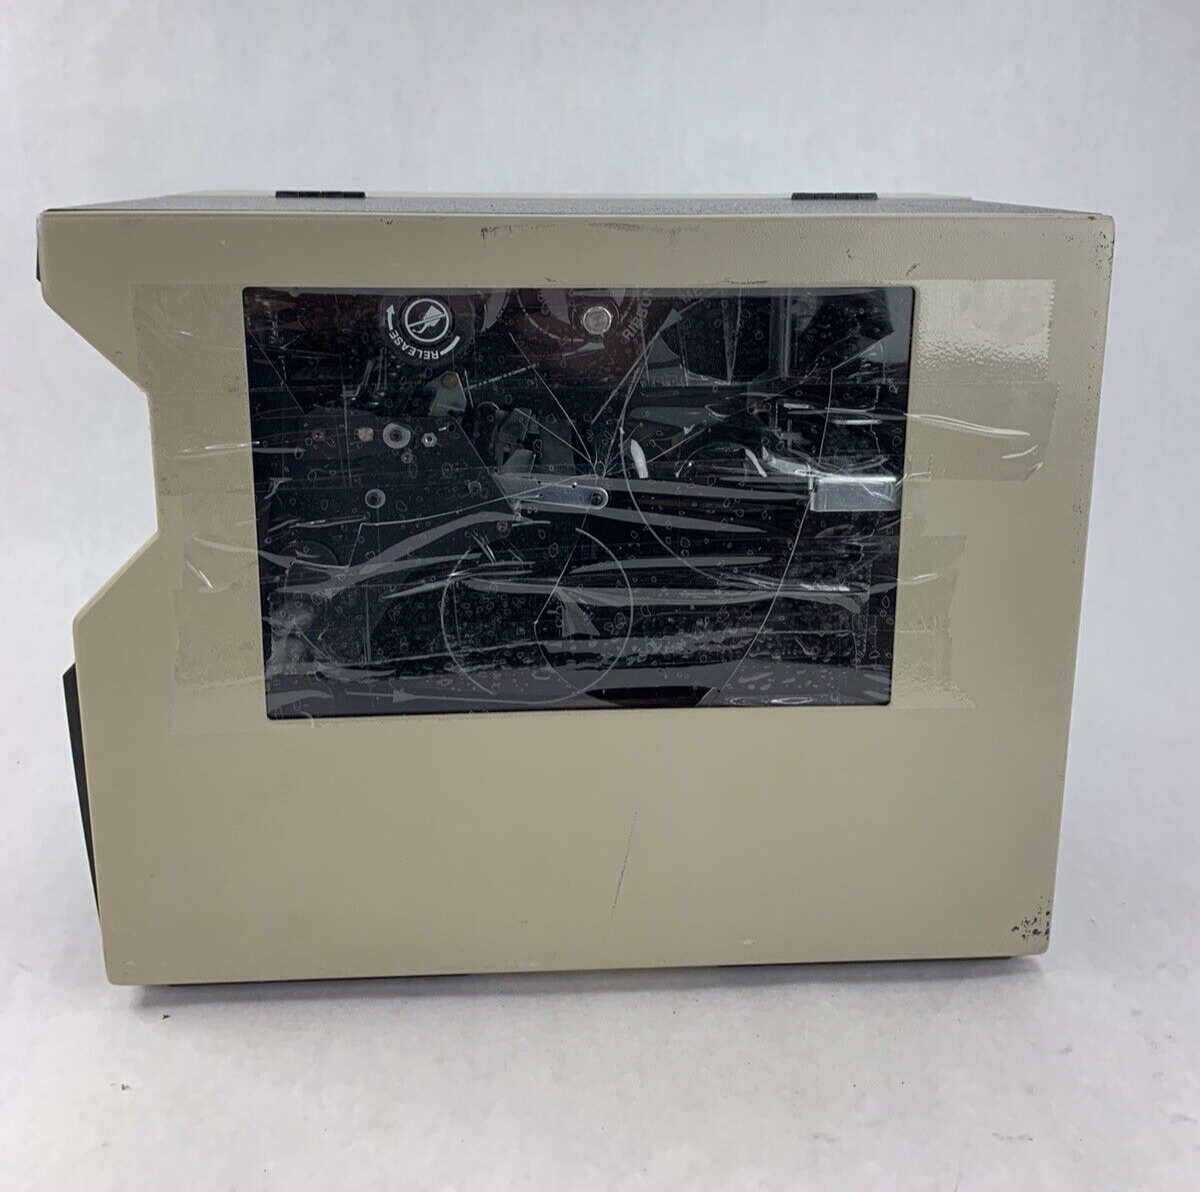 Zebra 140Xi III Label Ribbon and Thermal Printer Broken Window - For Parts